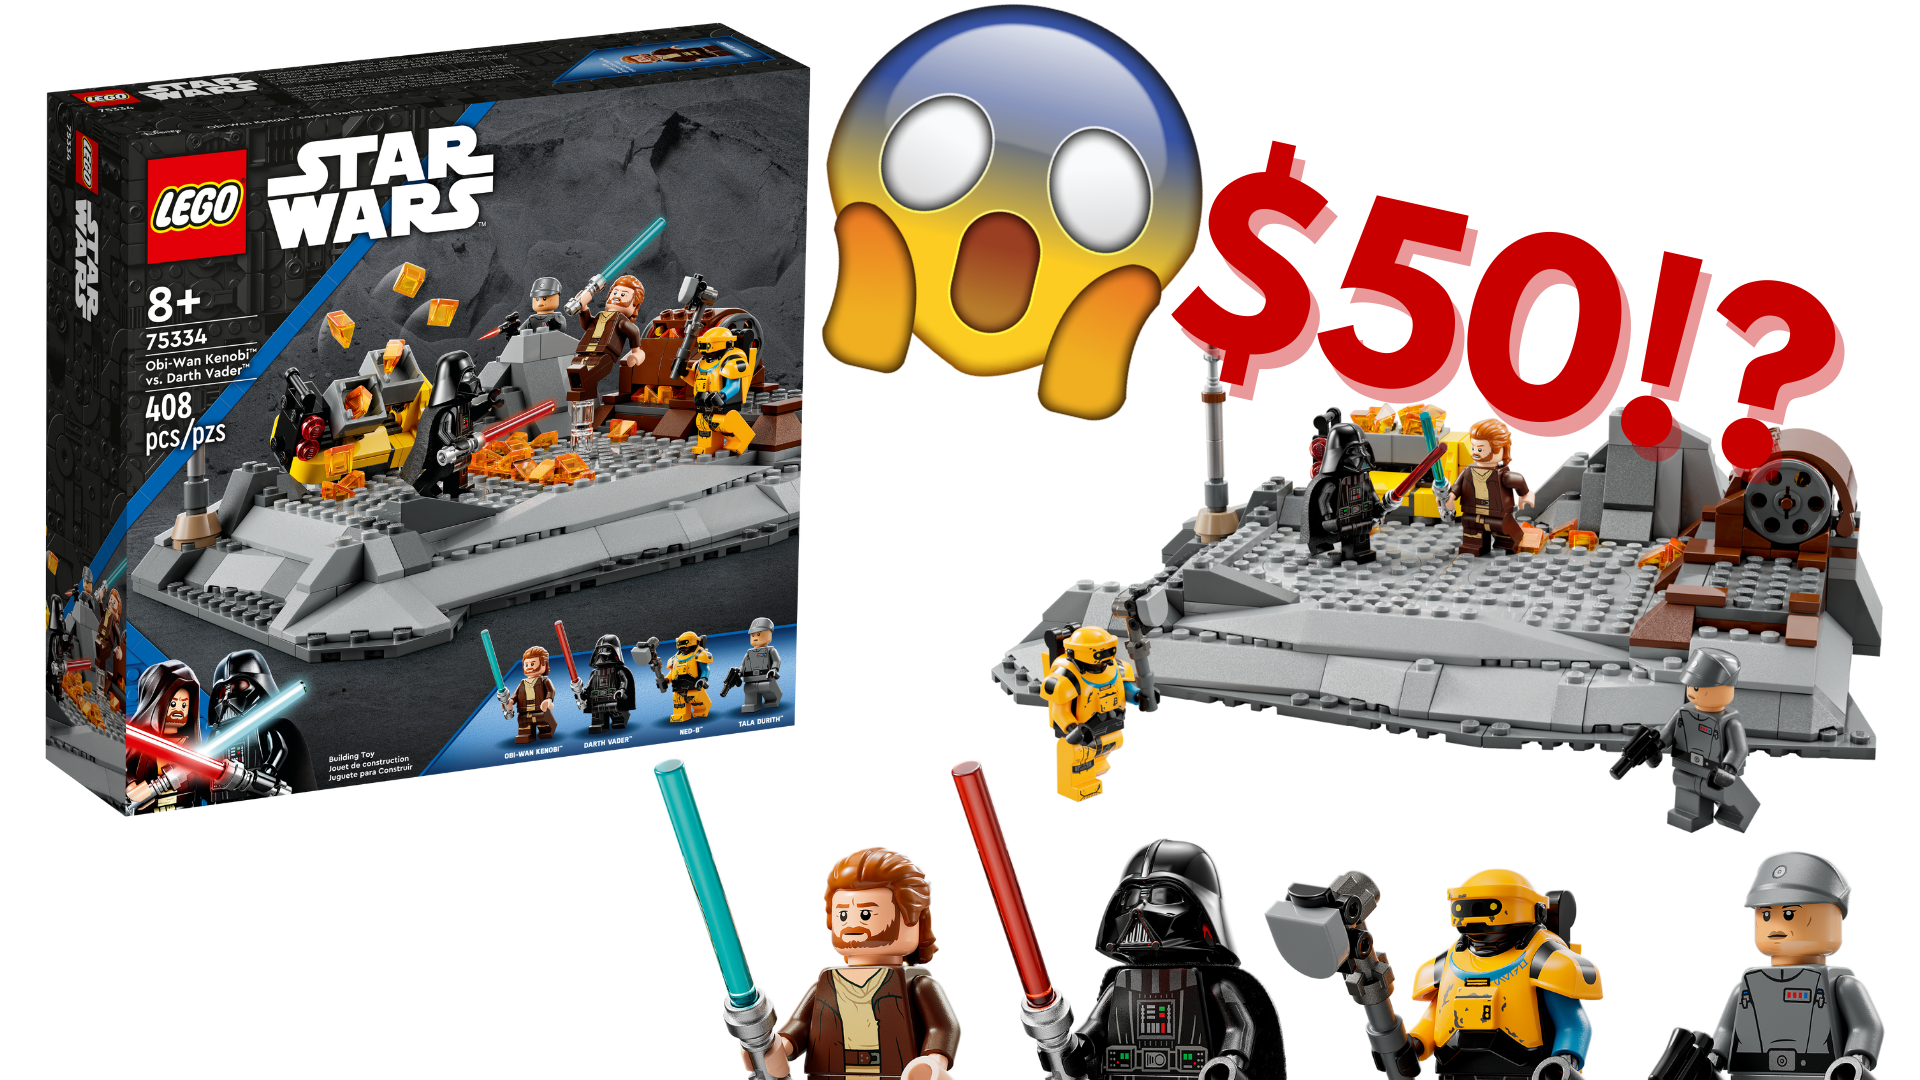 75334 Obi-Wan Kenobi vs. Darth Vader revealed - LEGO wants to charge US$50 this!? - Jay's Brick Blog